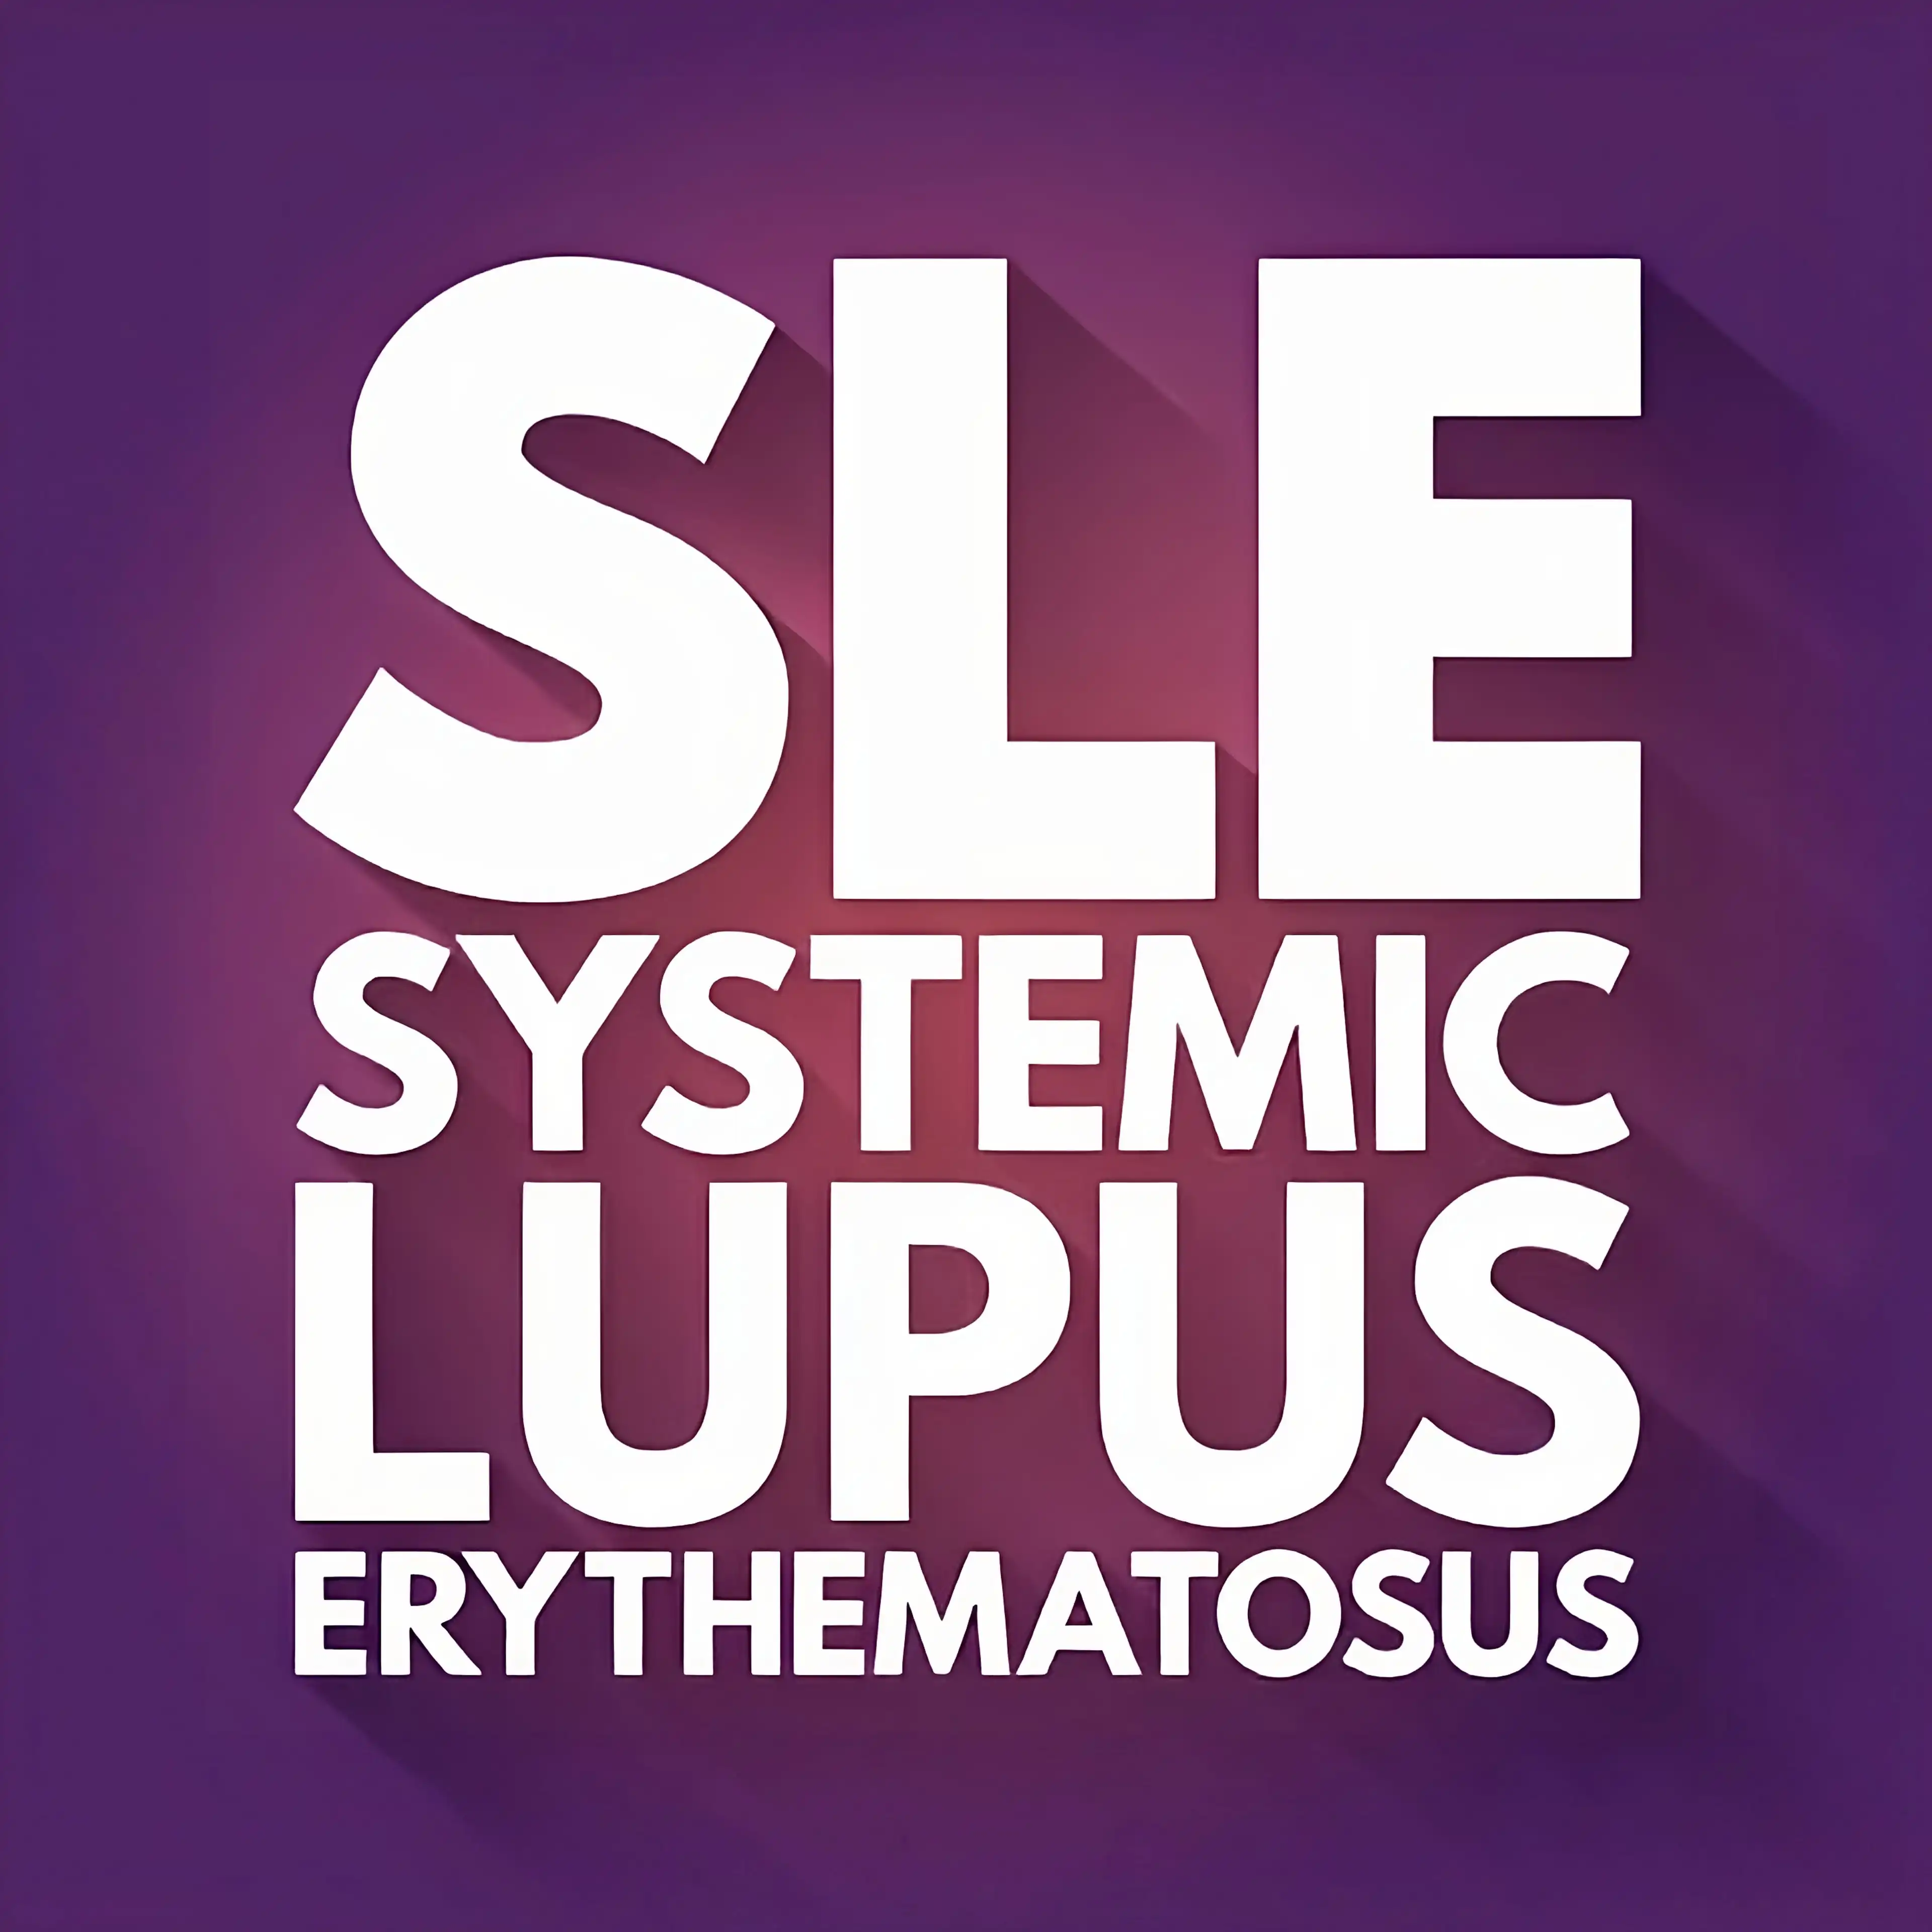 Systemic Lupus Erythematosus | Causes, Symptoms & Treatments